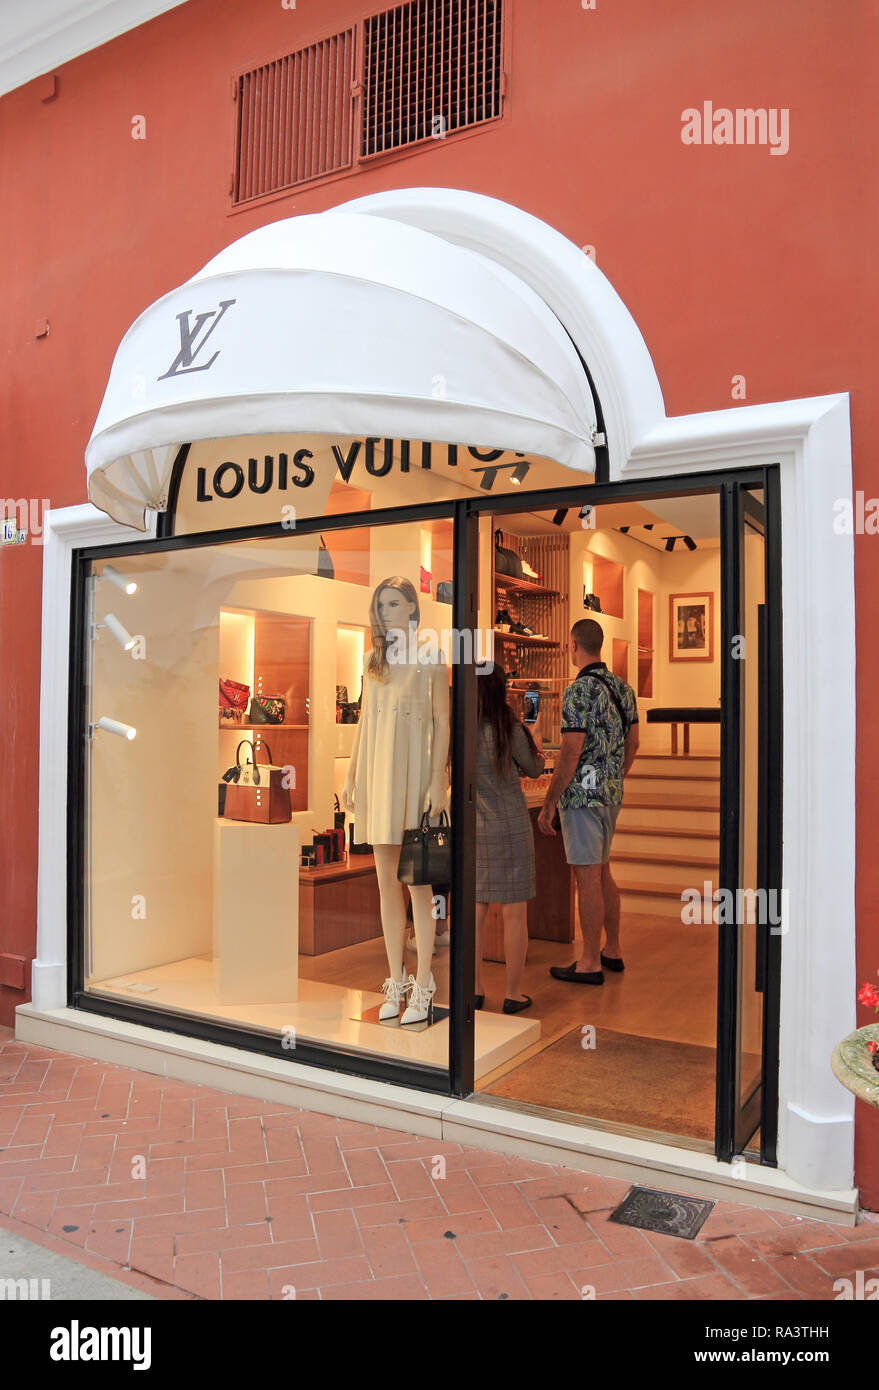 Louis shop, Stock Photo -